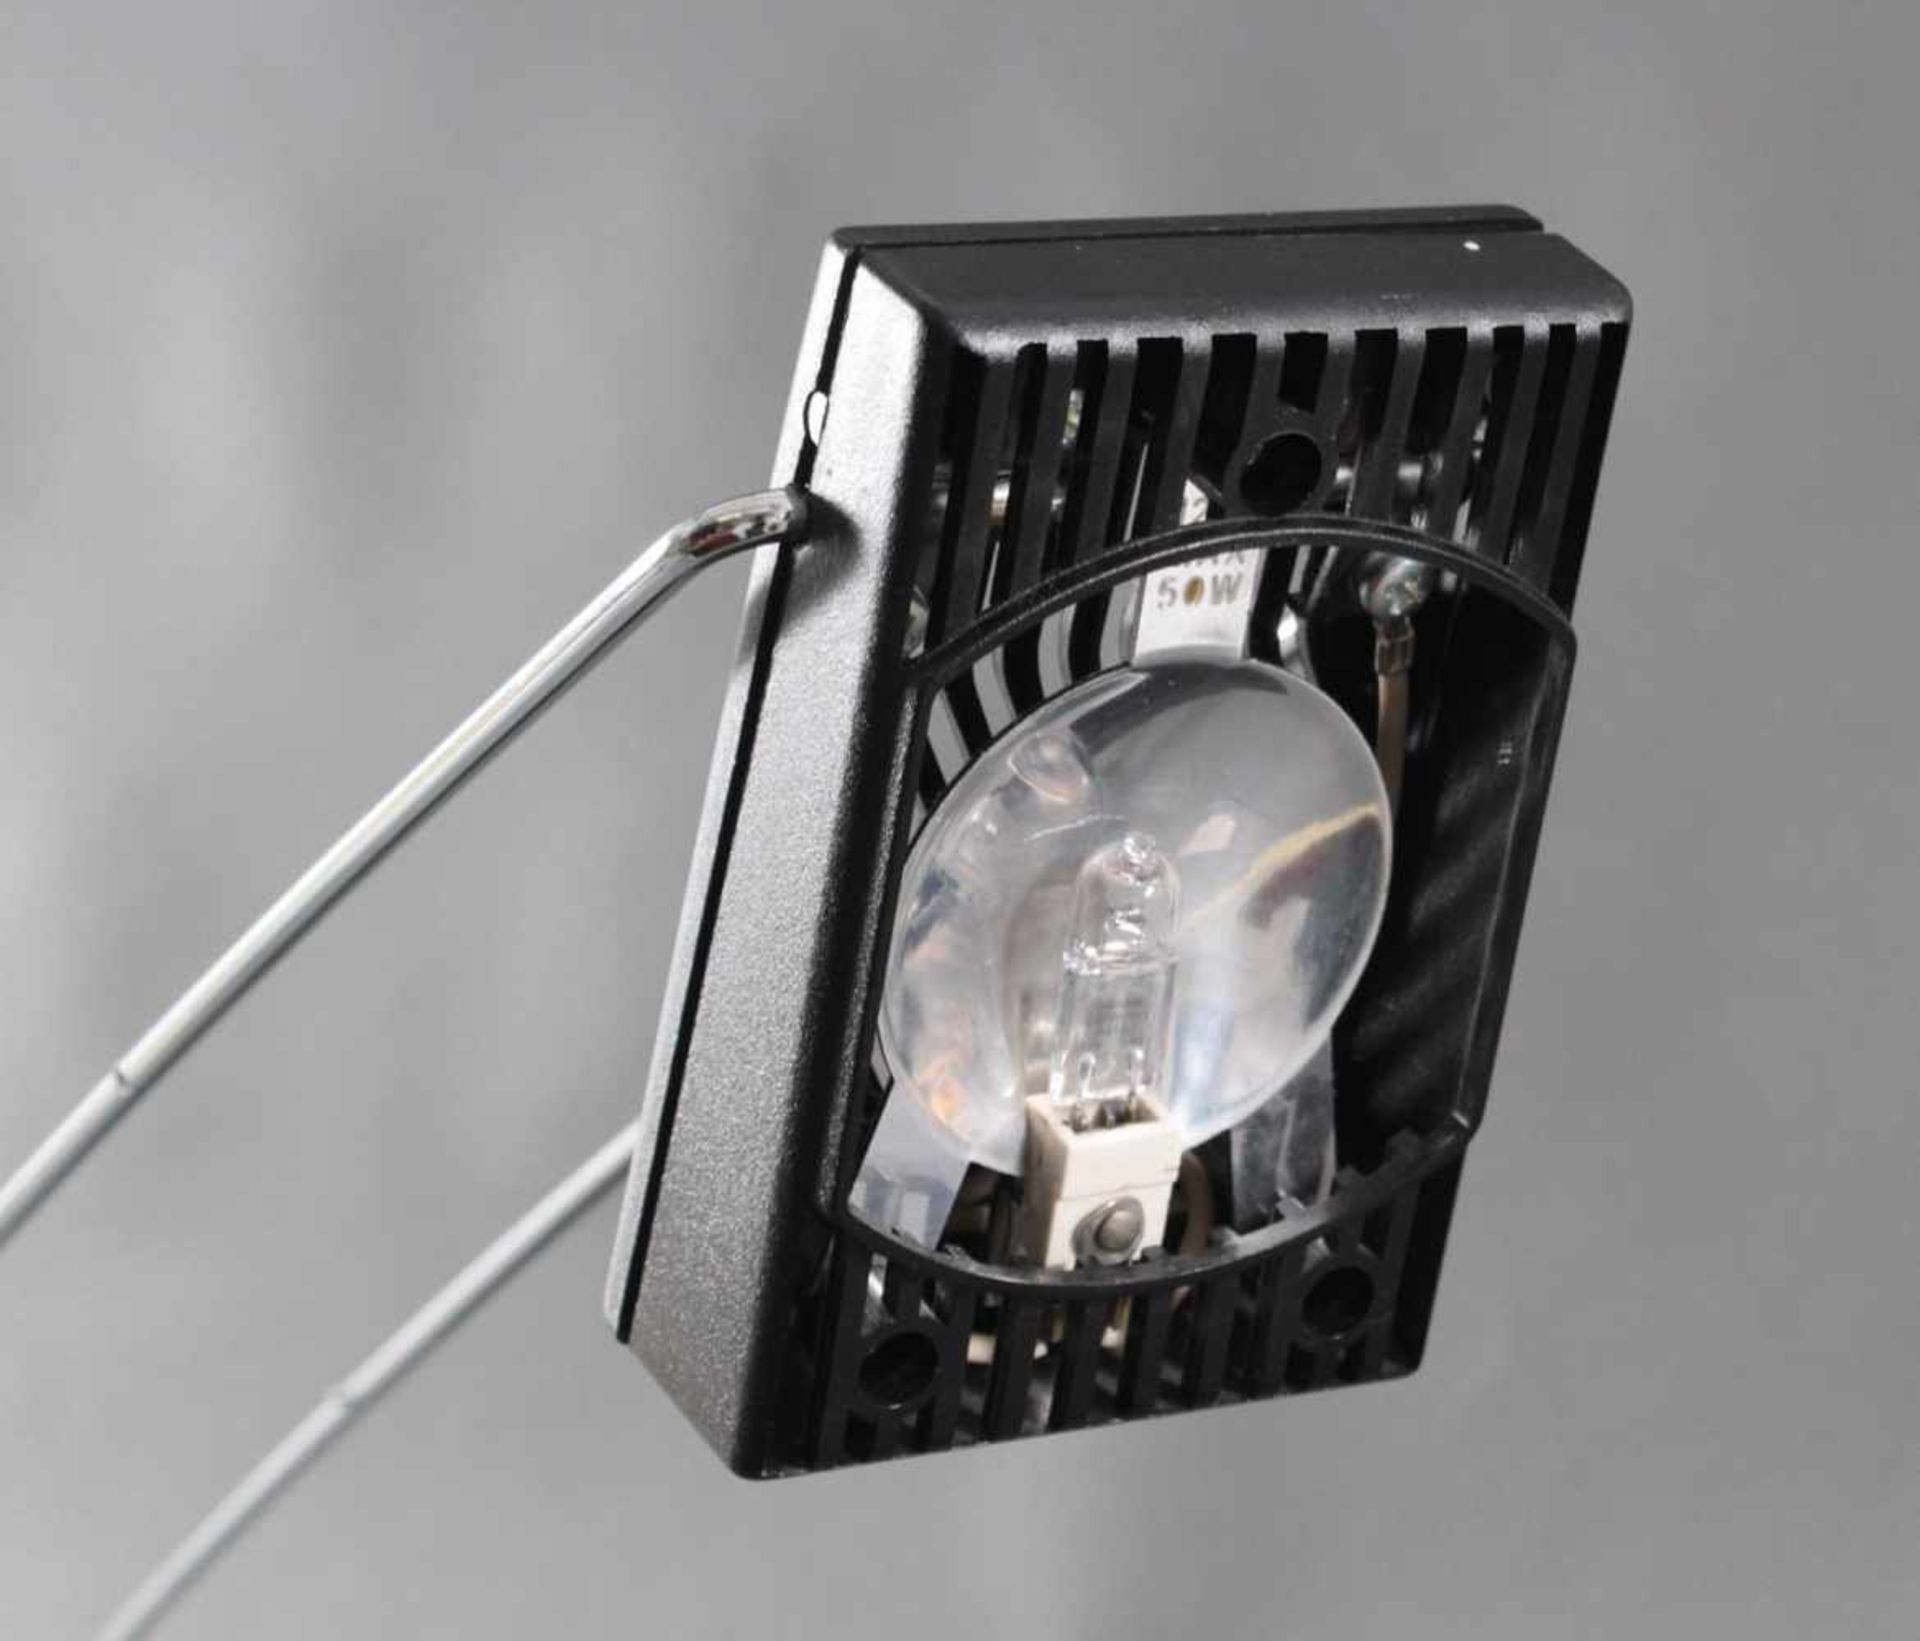 Designer Tischlampe, 80er JahreKunststoff/Metall. Lampe mit Halogen Beleuchtung, ca. H-52 cm. - Image 2 of 3